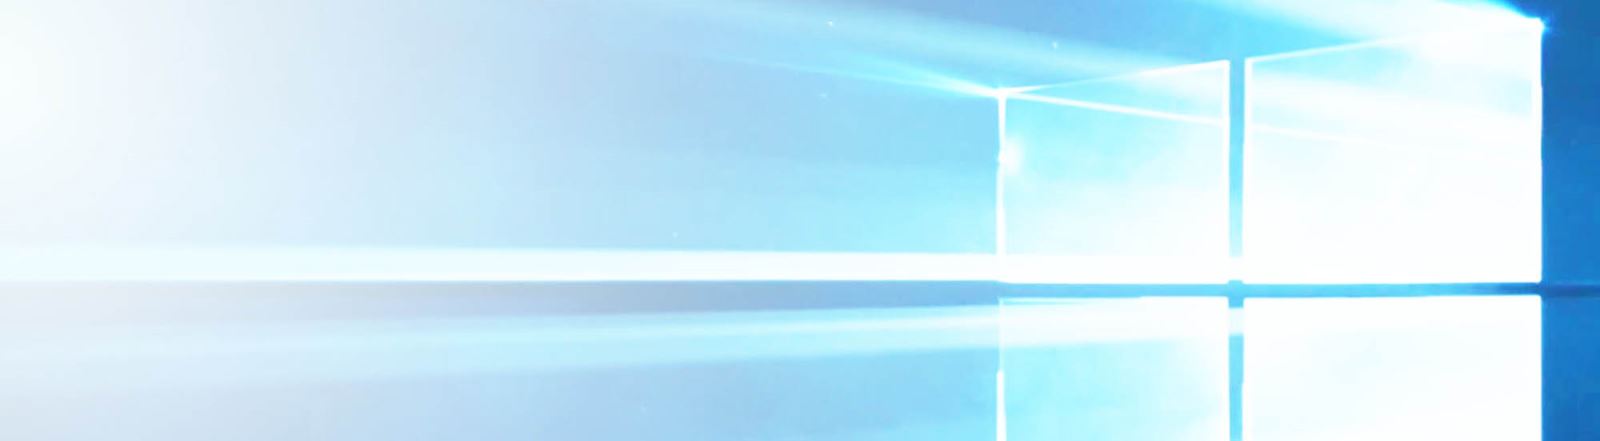 Windows 10 keeps crashing after update